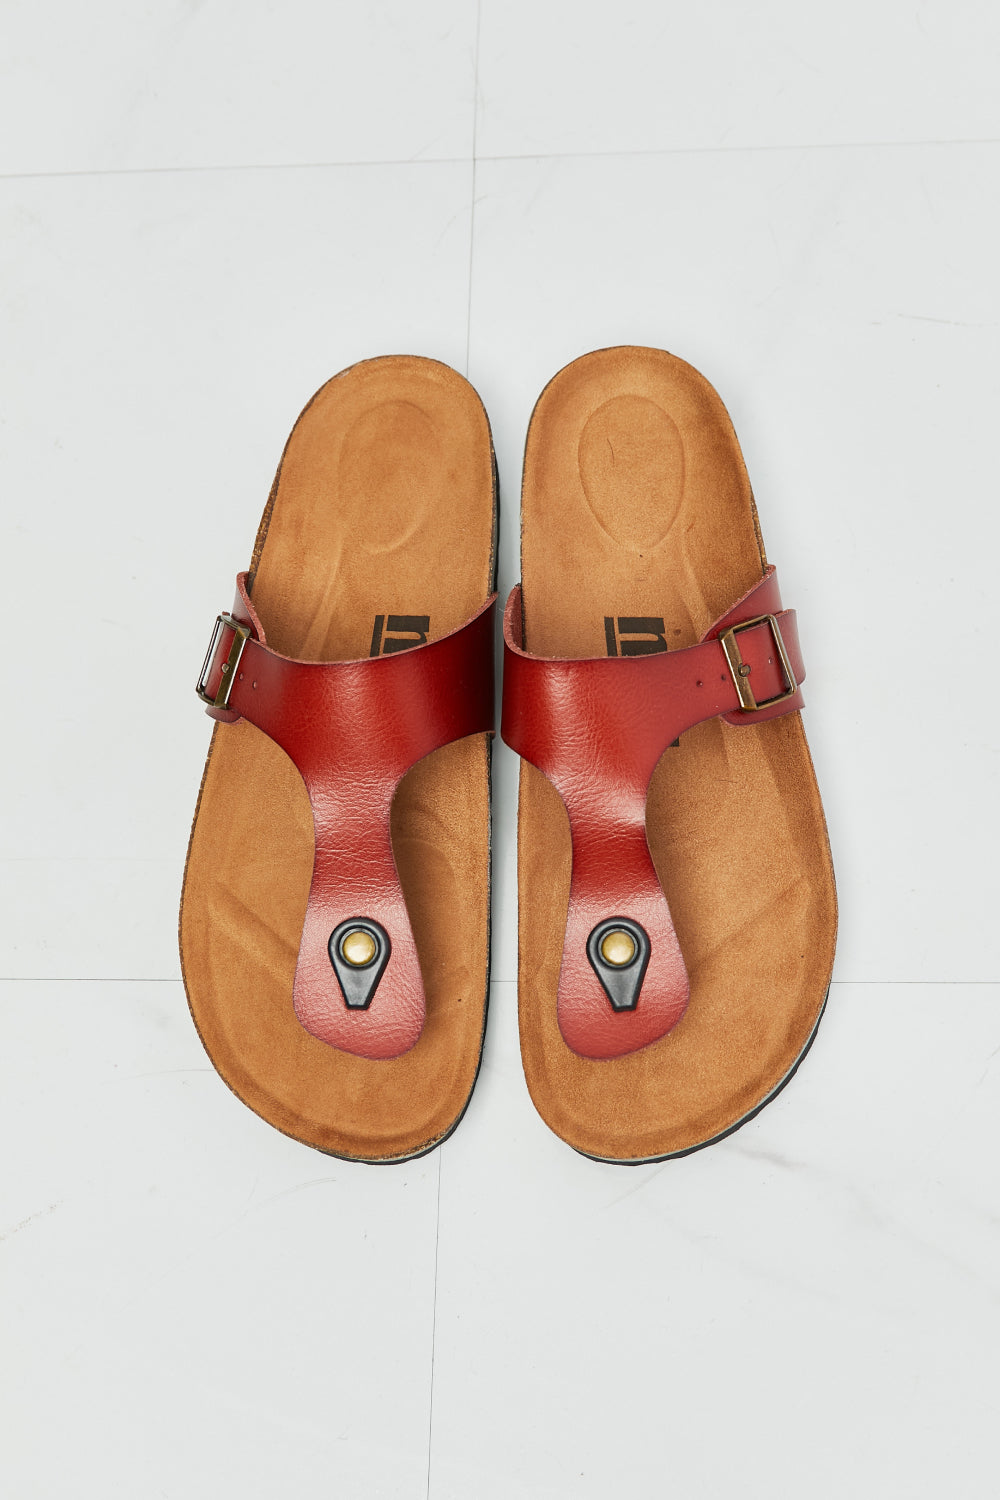 MMShoes Drift Away T-Strap Flip-Flop in Red - Tigbul's Fashion